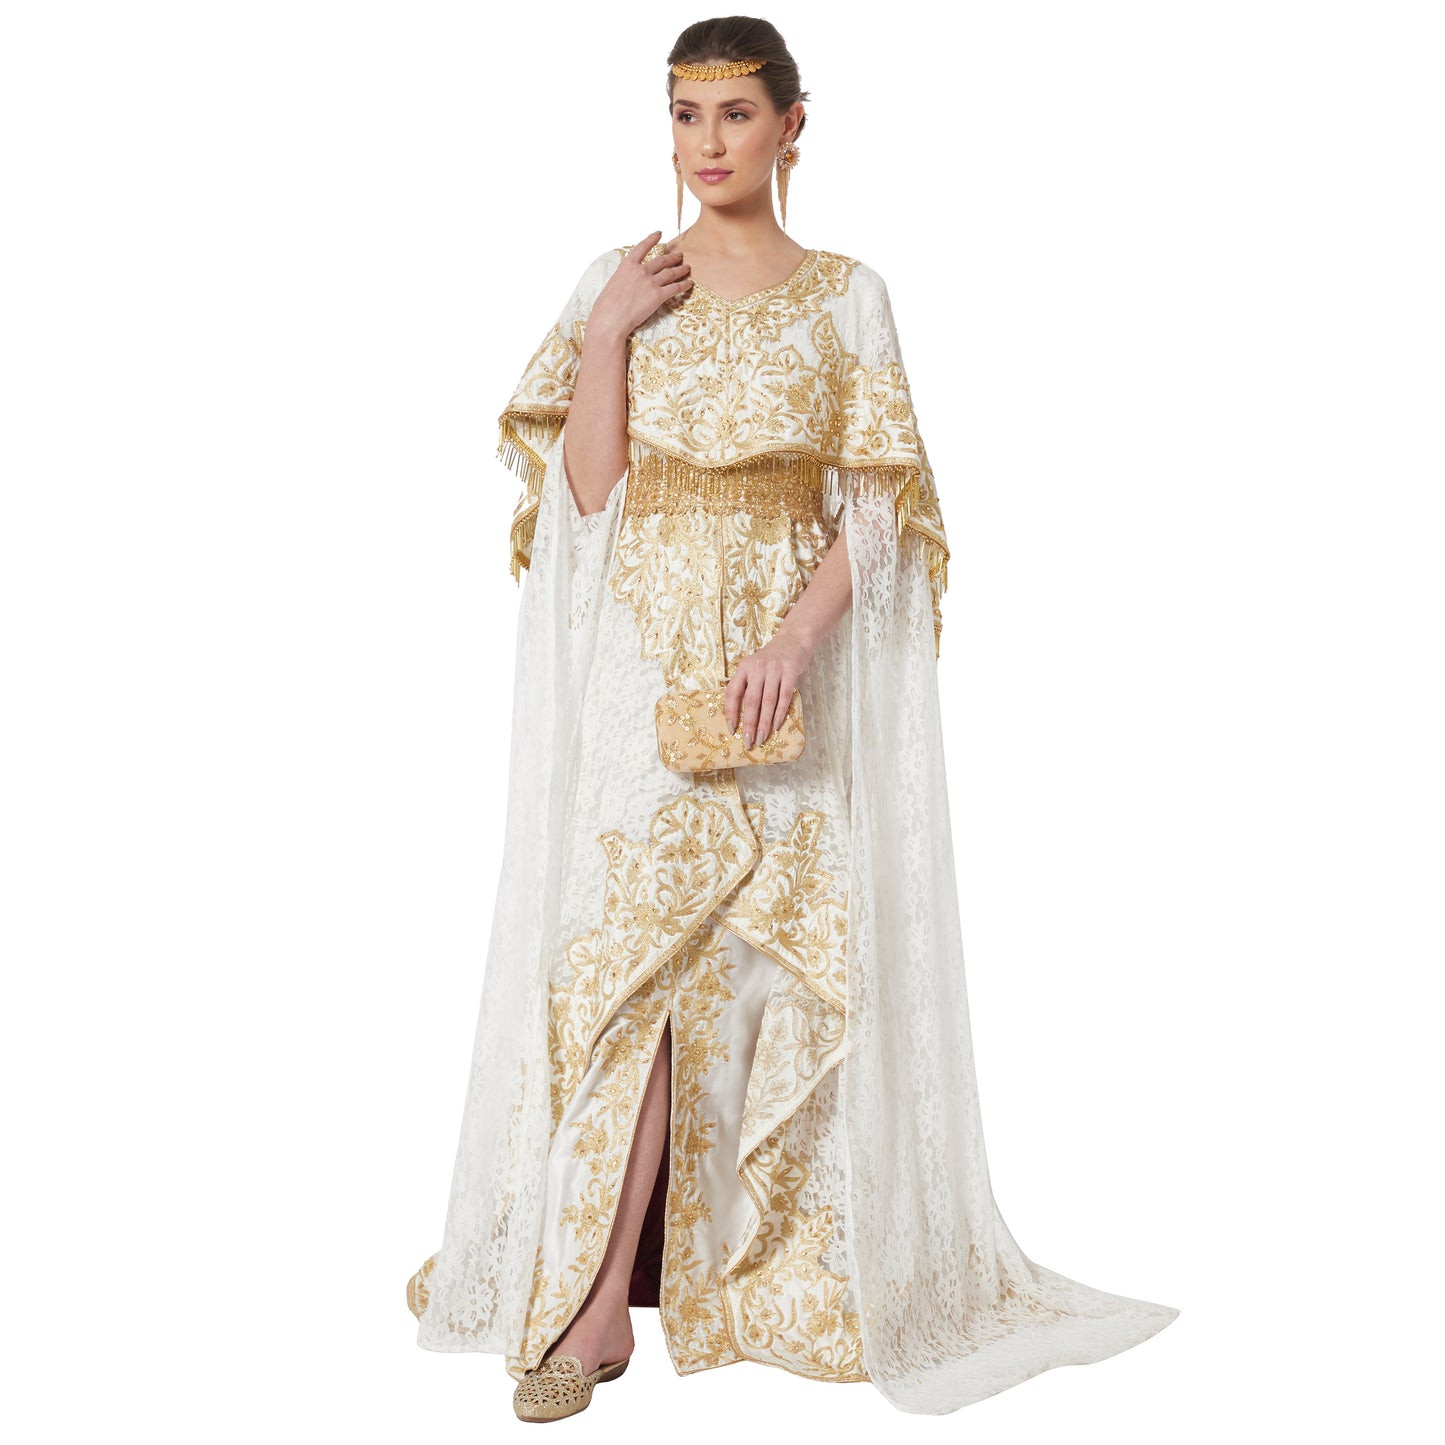 Wedding Dress Ball Gown with Rich Thread Embroidery & Tassels - Maxim Creation